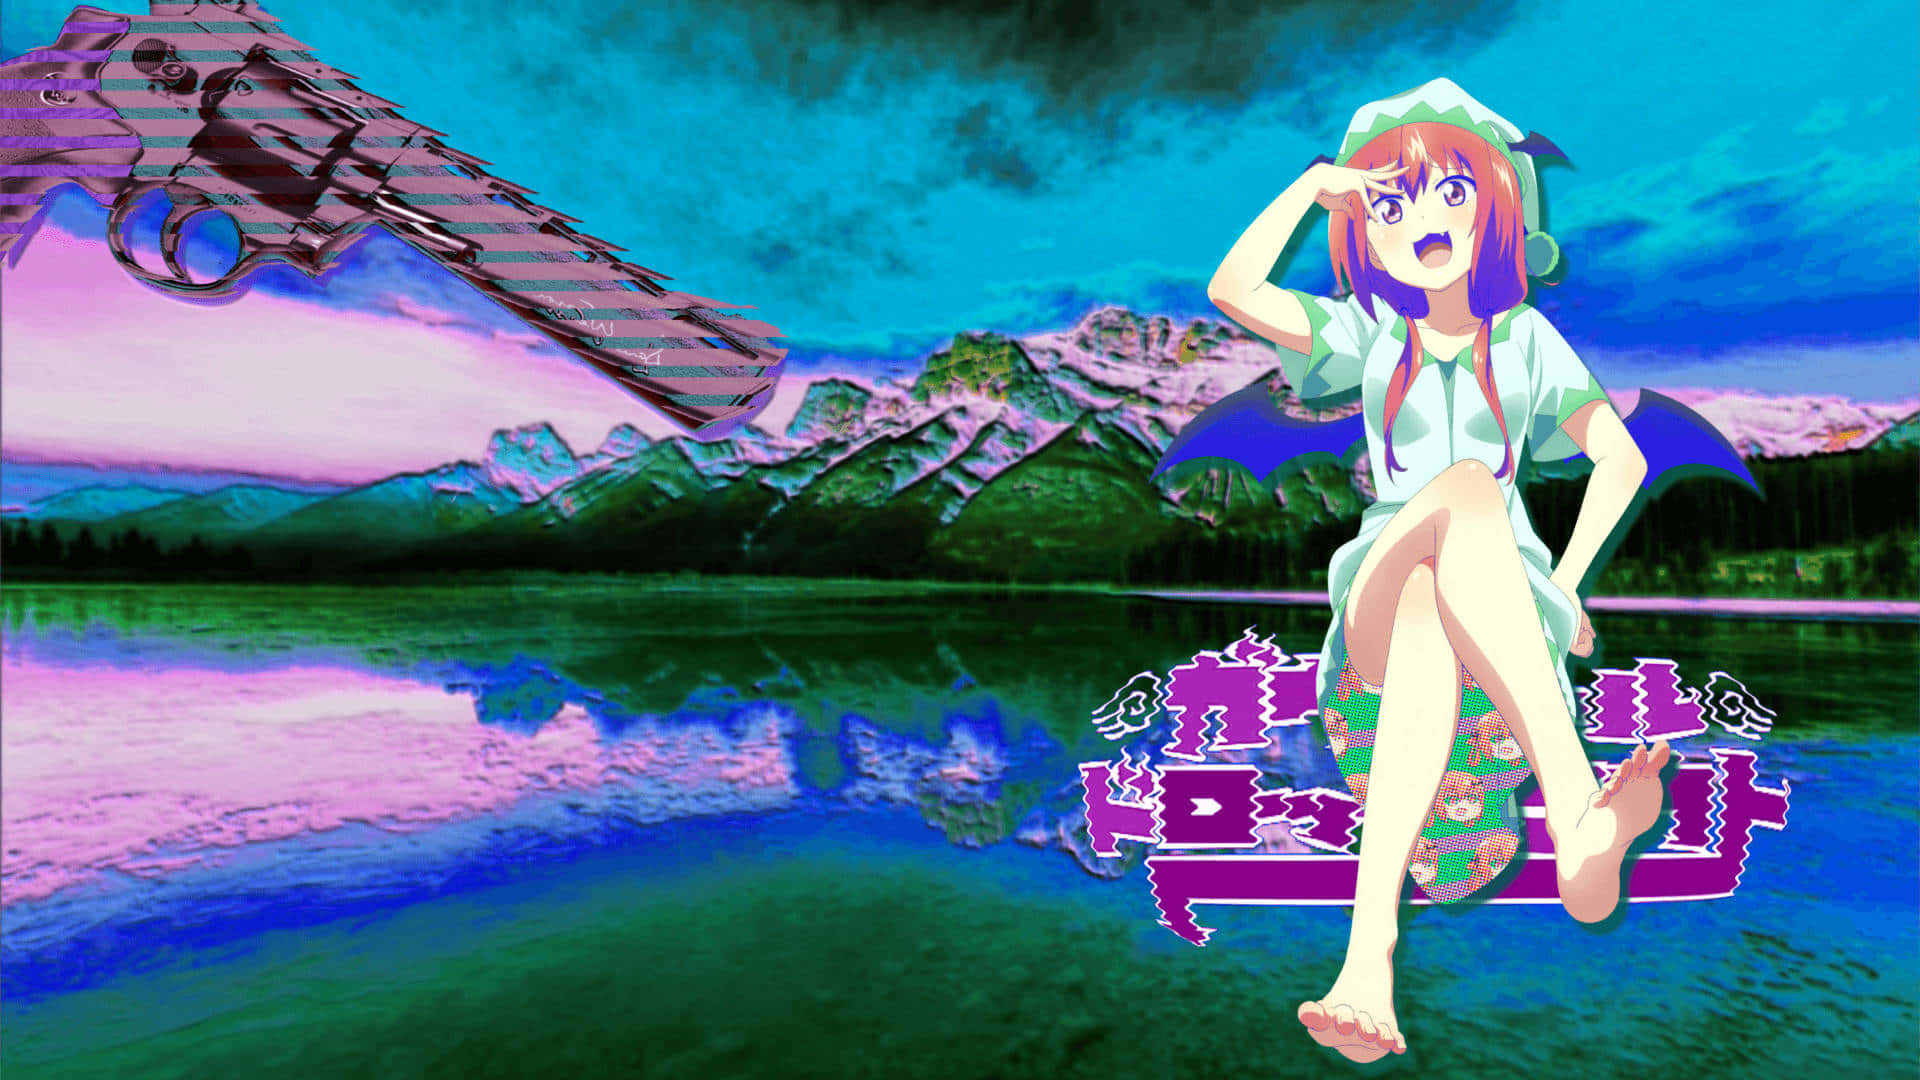 Vaporwave Anime Character Wielding a Purple Gun in a Surreal World Wallpaper